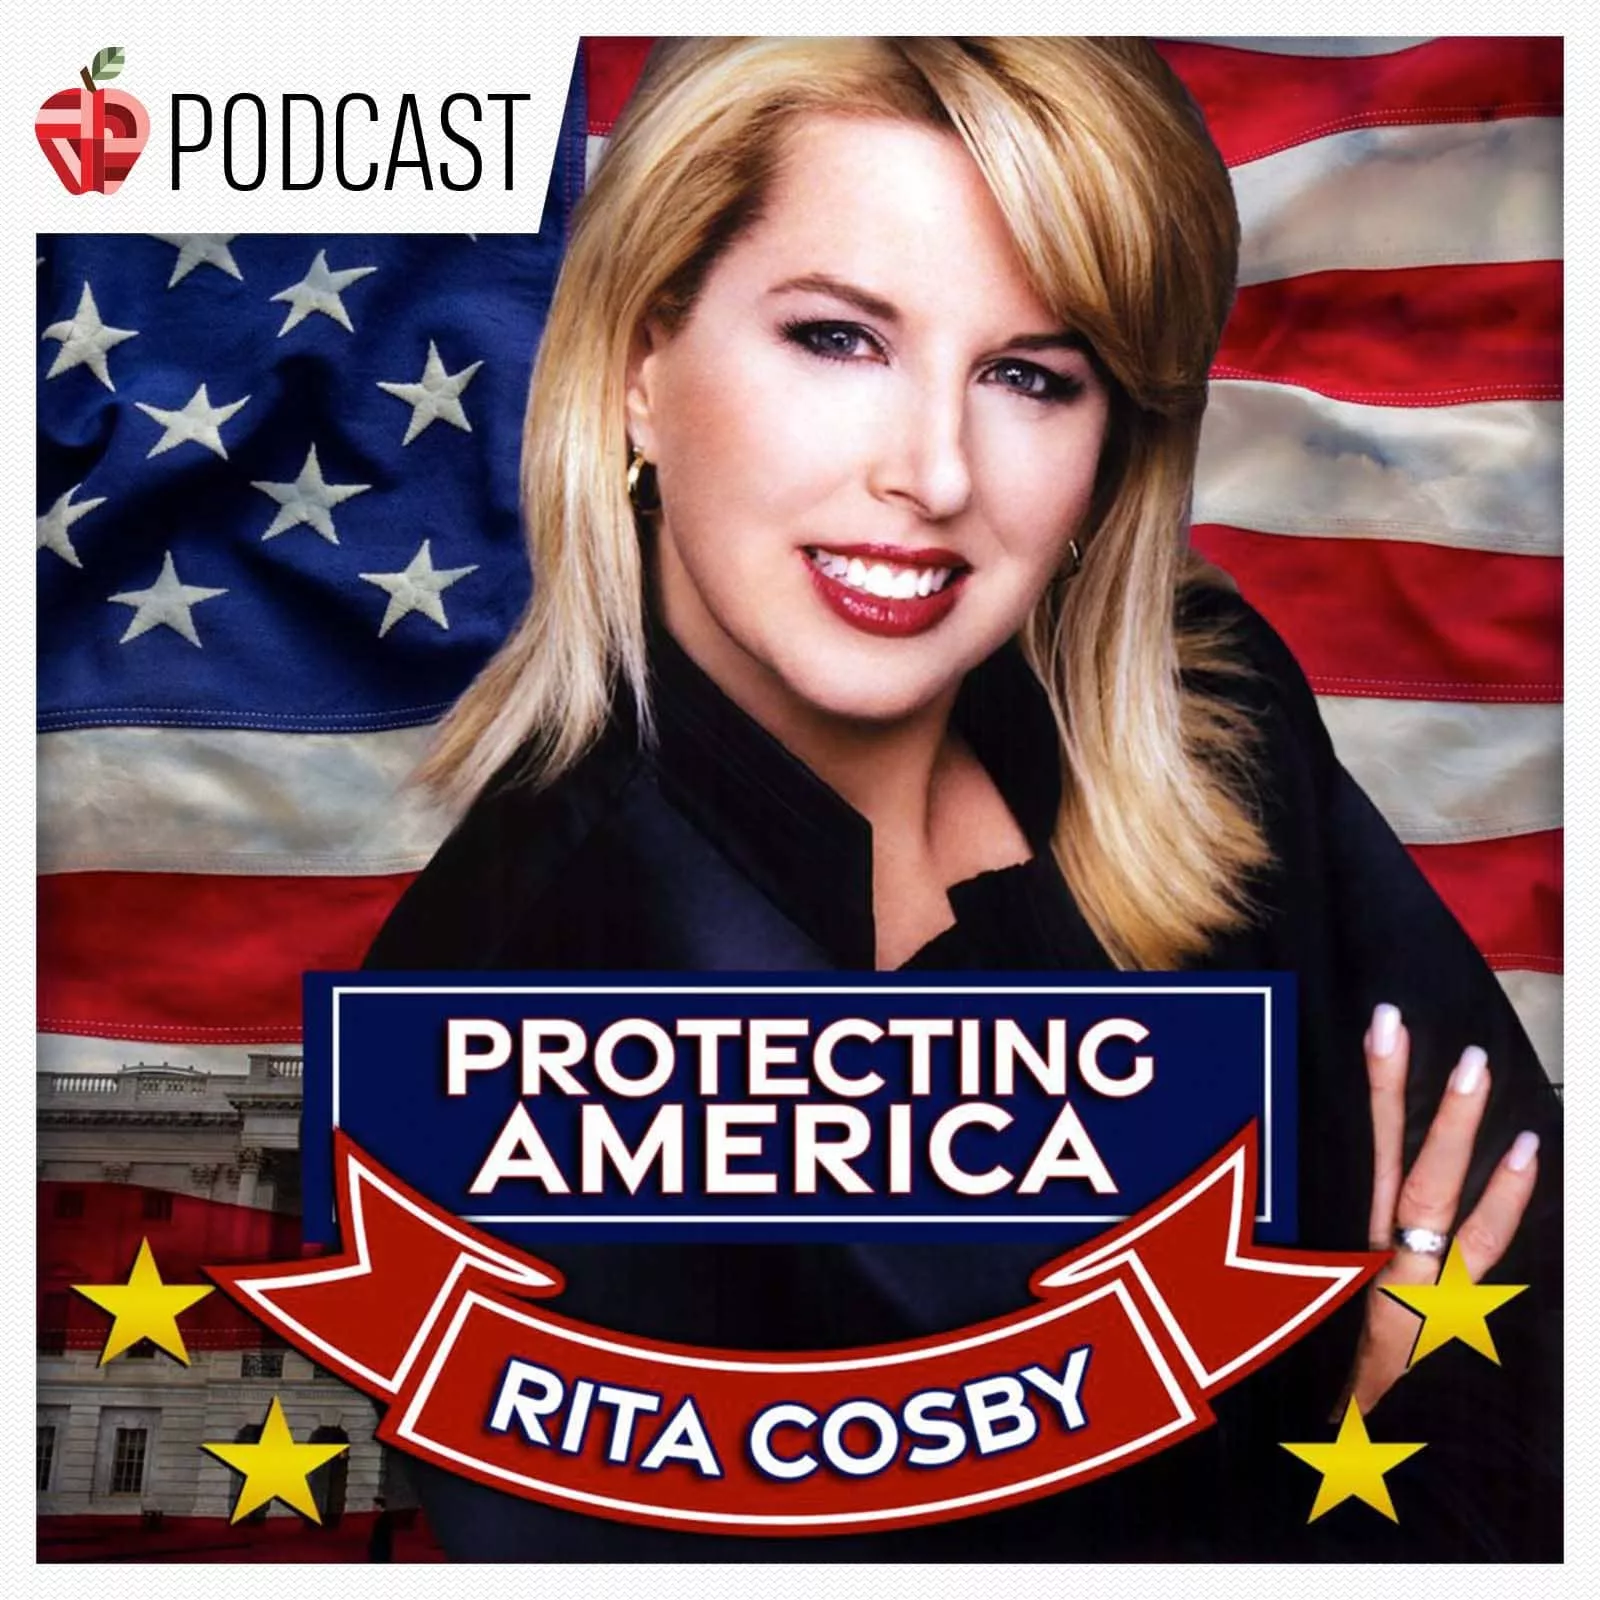 rita-cosby-protecting-america-correct-podcast-new-logo578318